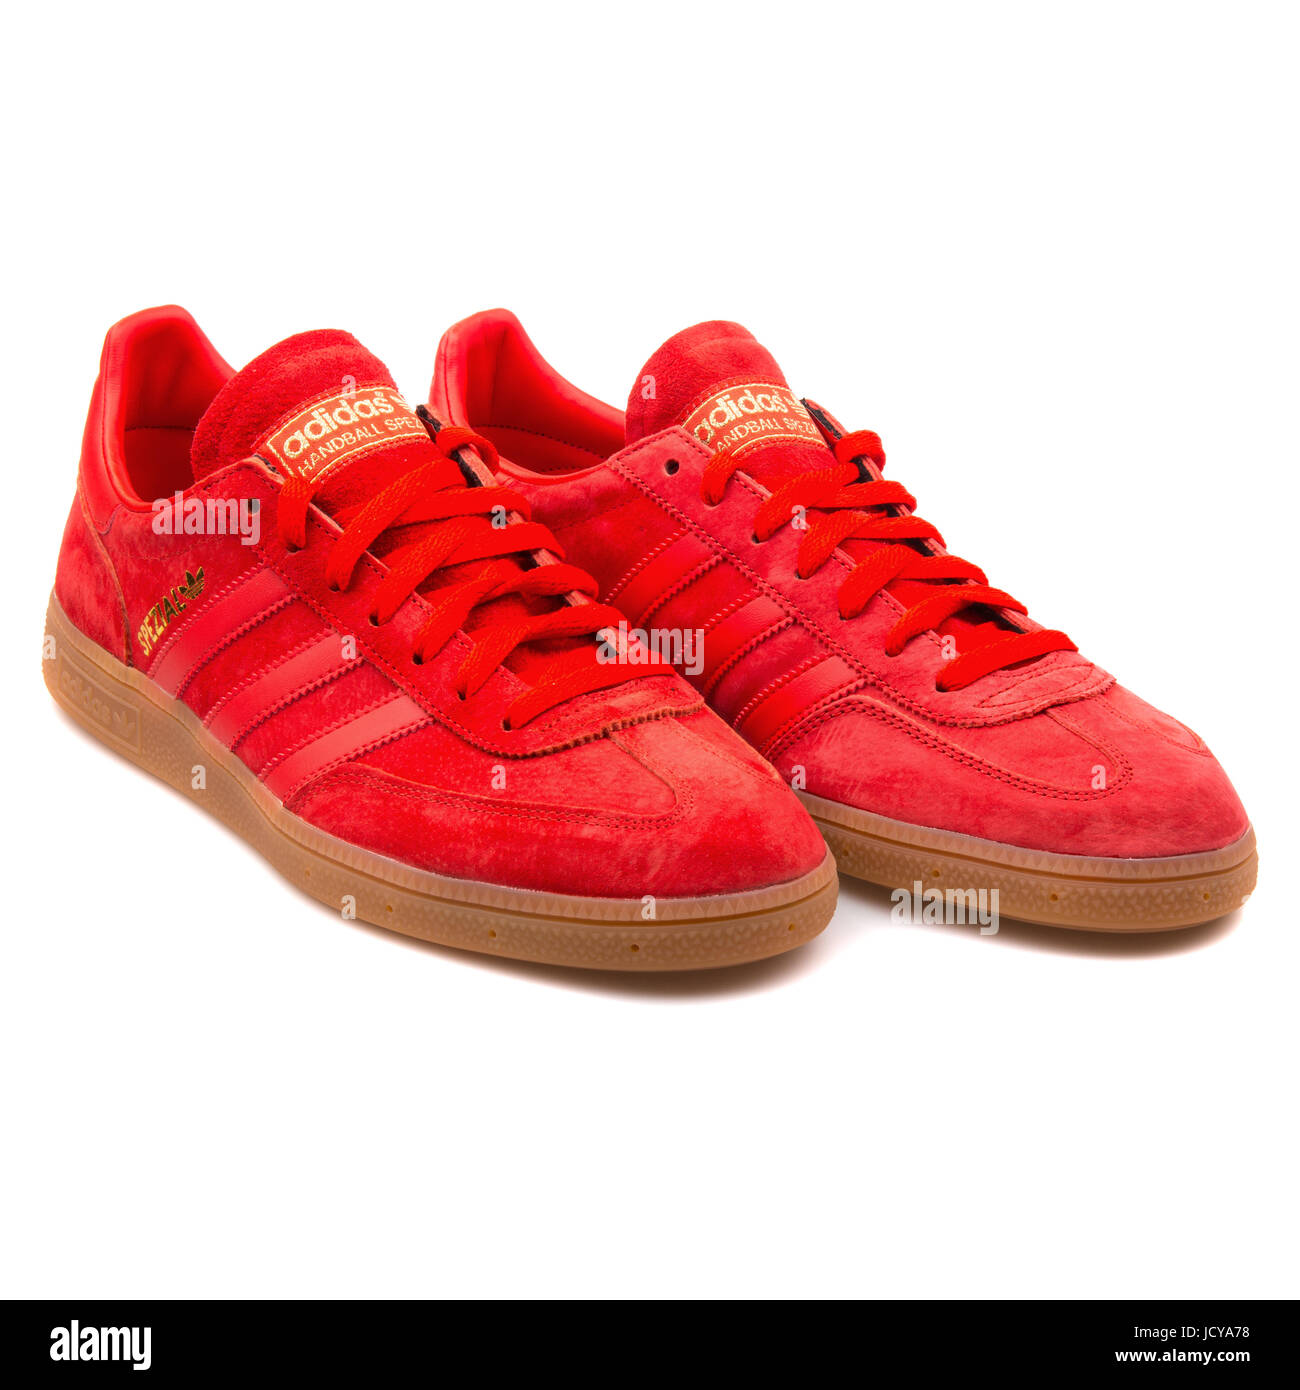 Adidas Spezial rosso uomo Calzature sportive - B35209 Foto stock - Alamy